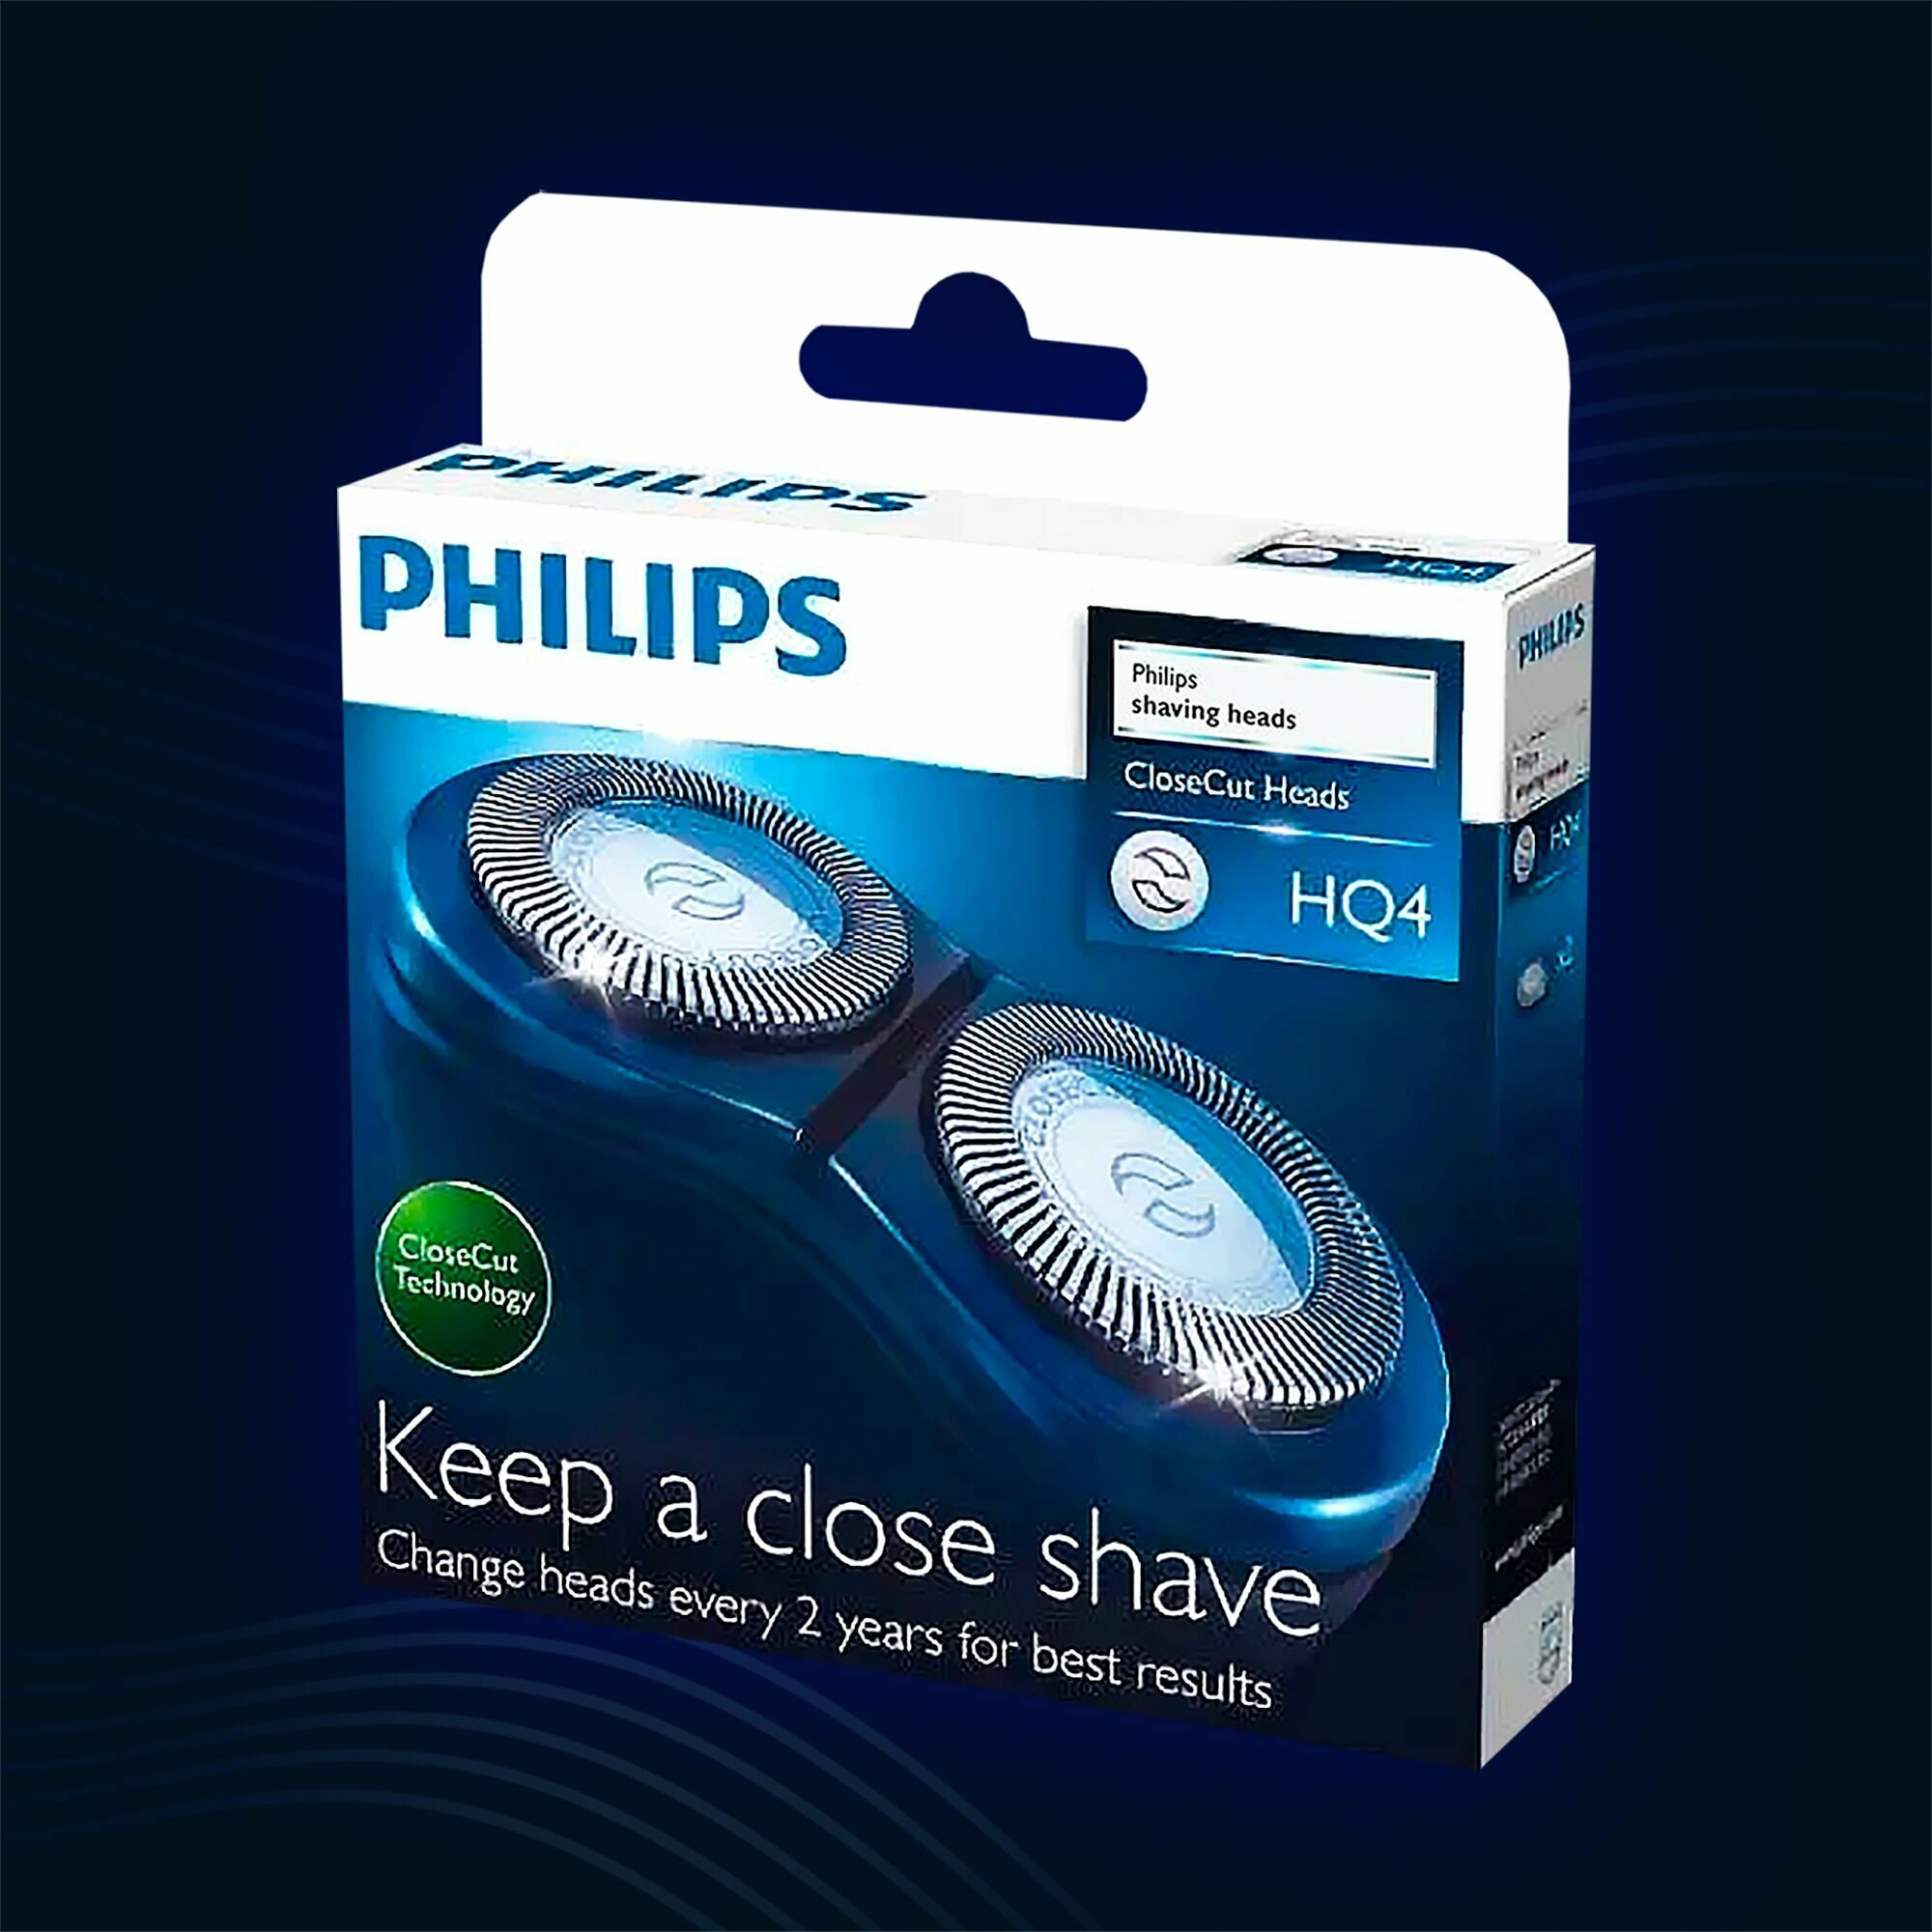 Бритвенные головки Philips HQ4 /40 CloseCut Heads для серии бритв Philips HQ3, HQ56, HQ46, HQ55, HQ300 HQ916 - фотография № 1